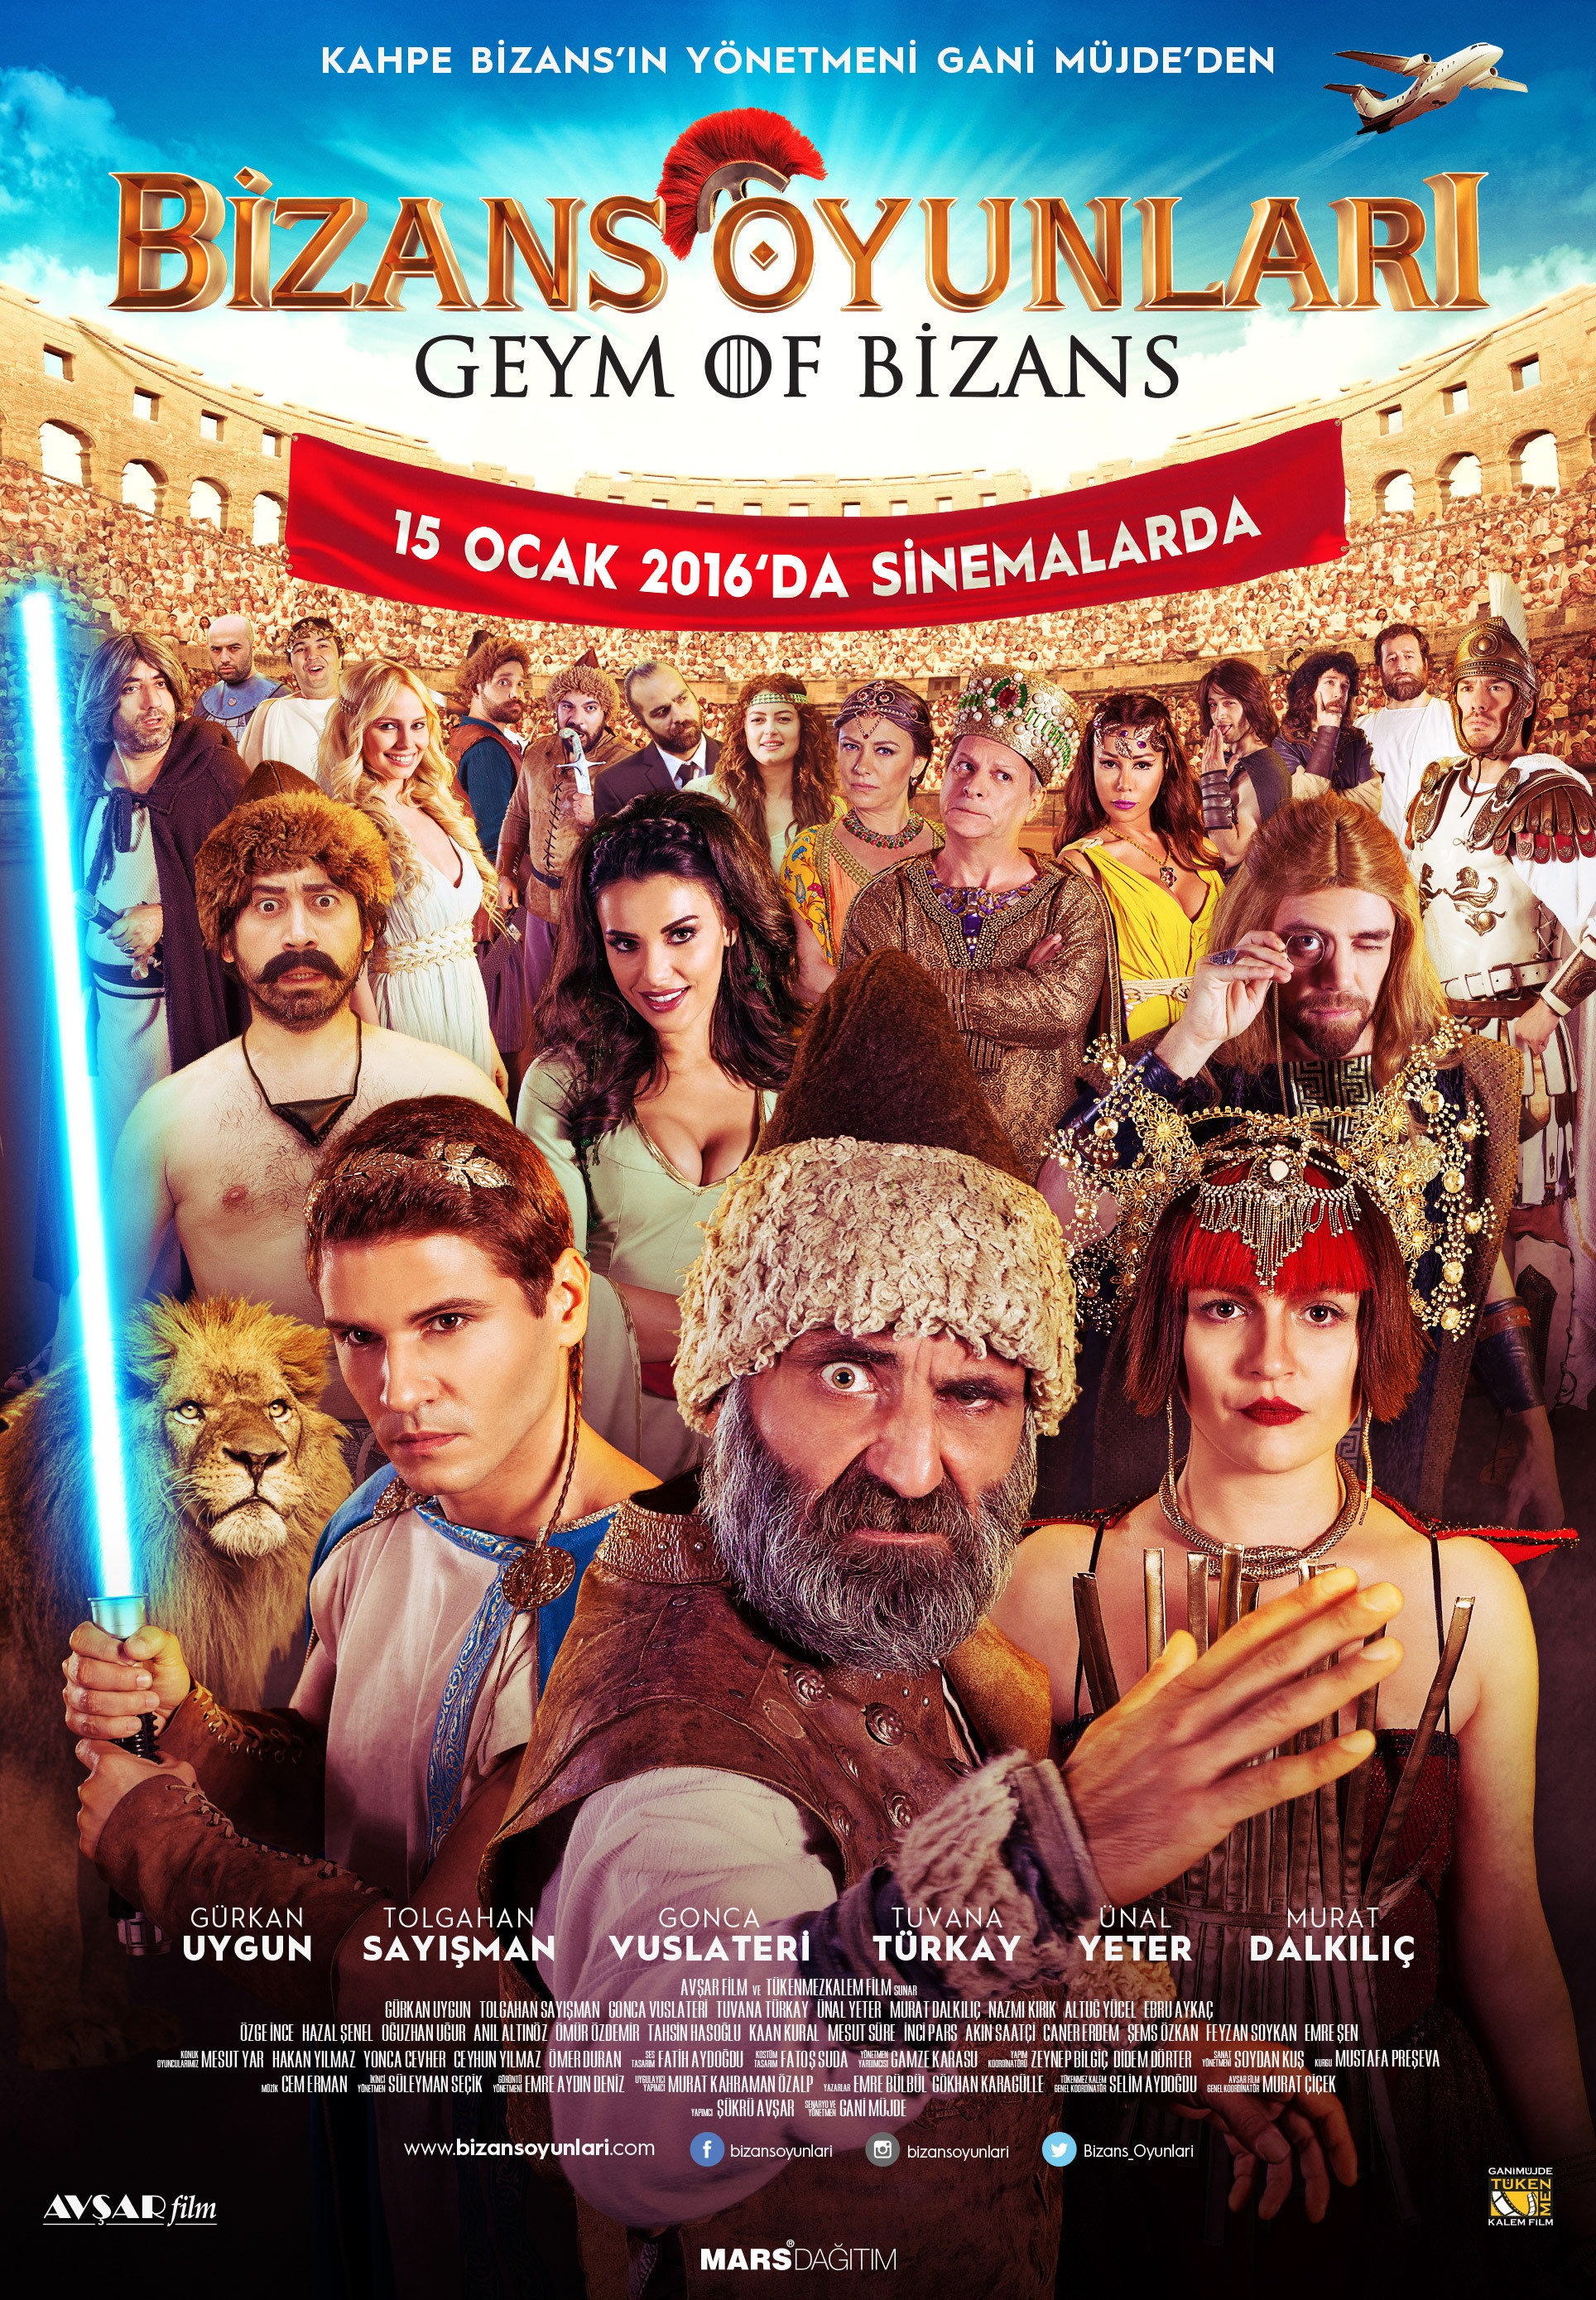 Mega Sized Movie Poster Image for Bizans Oyunlari (#1 of 7)